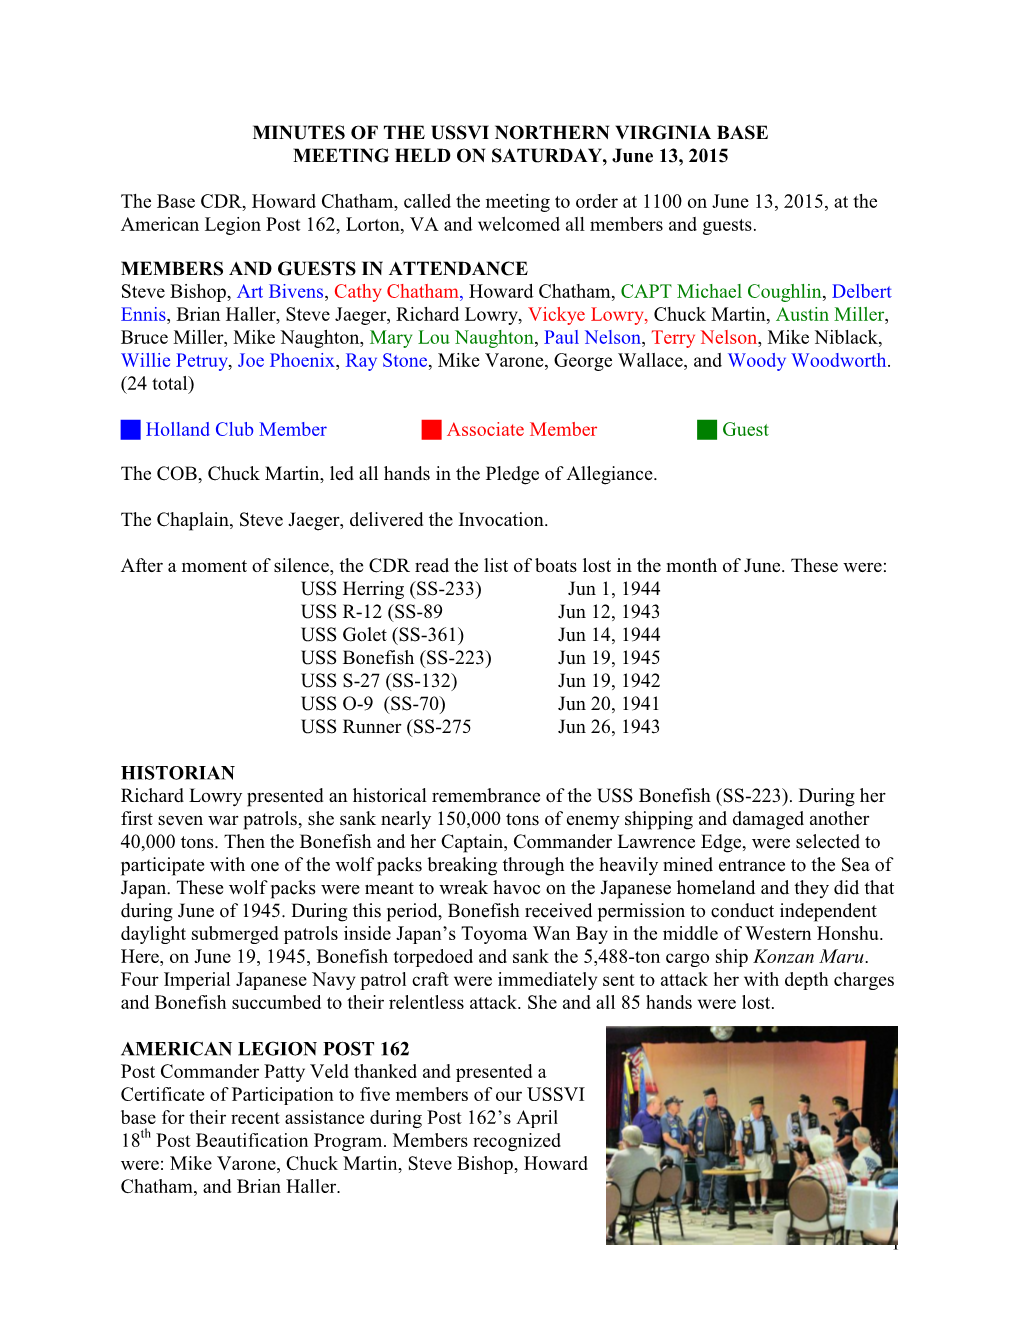 USSVI NOVA Base Jun 2015 Meeting Minutes.Pdf